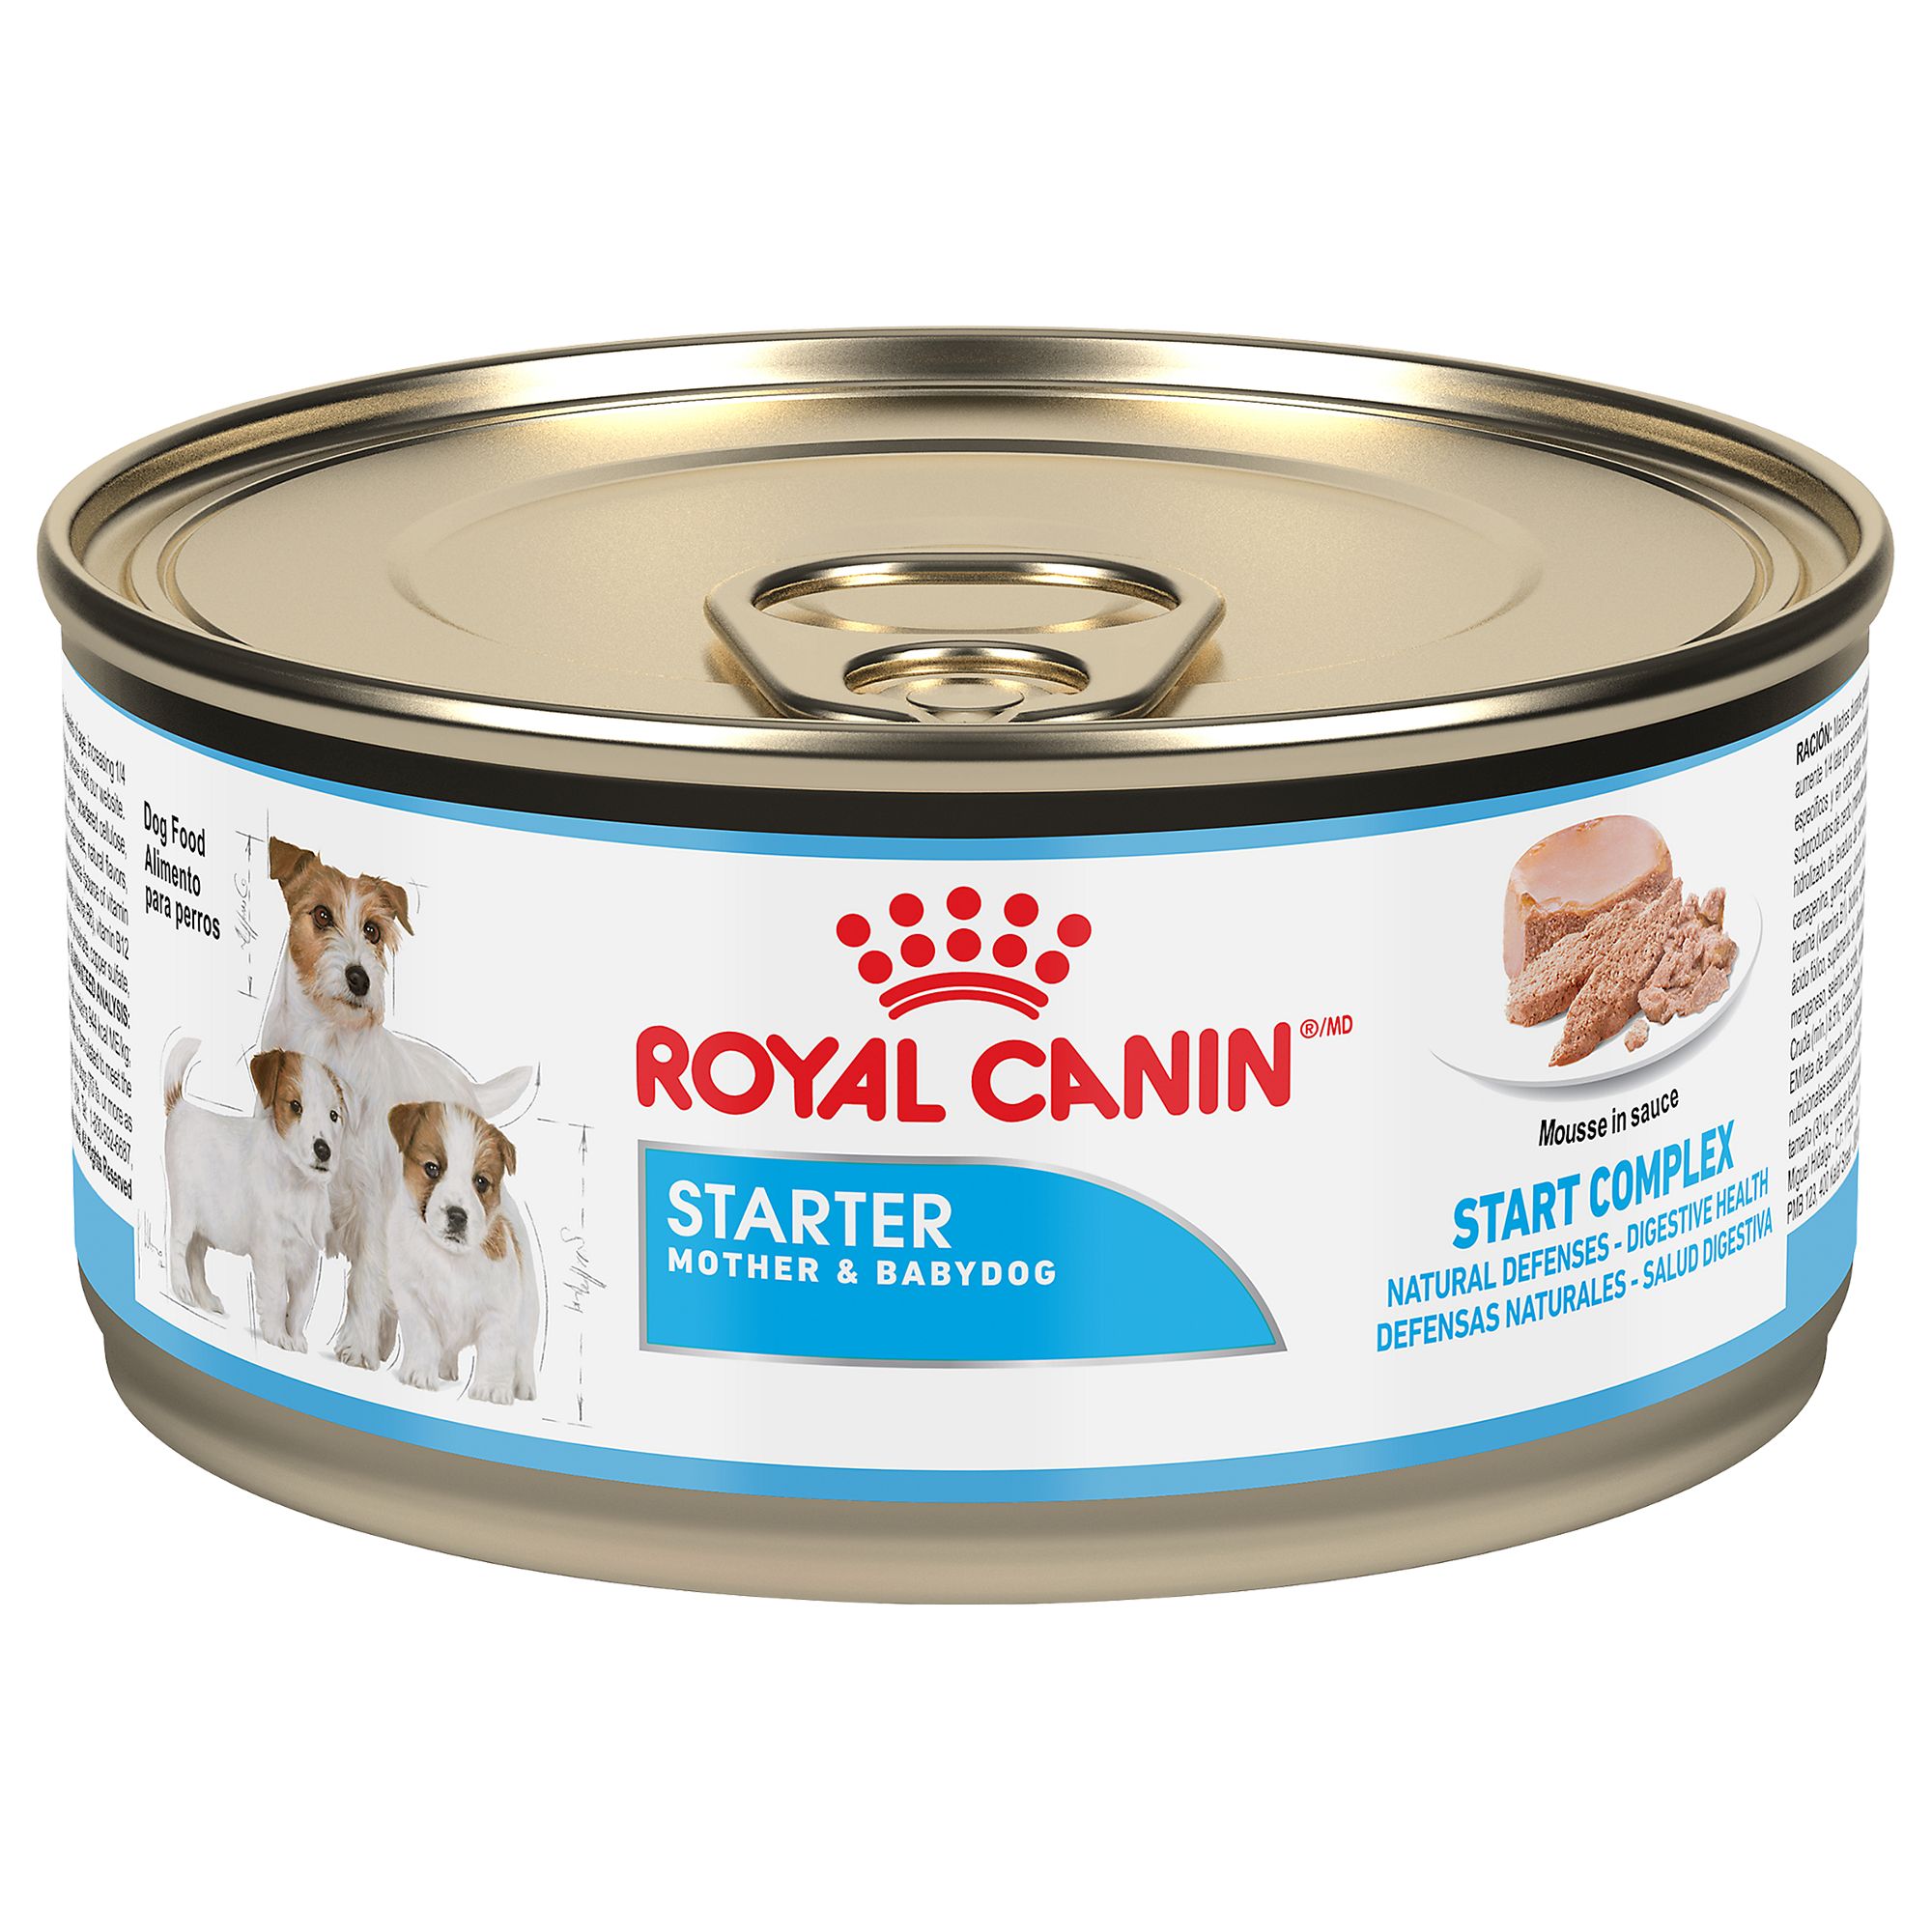 royal canin cat food ireland